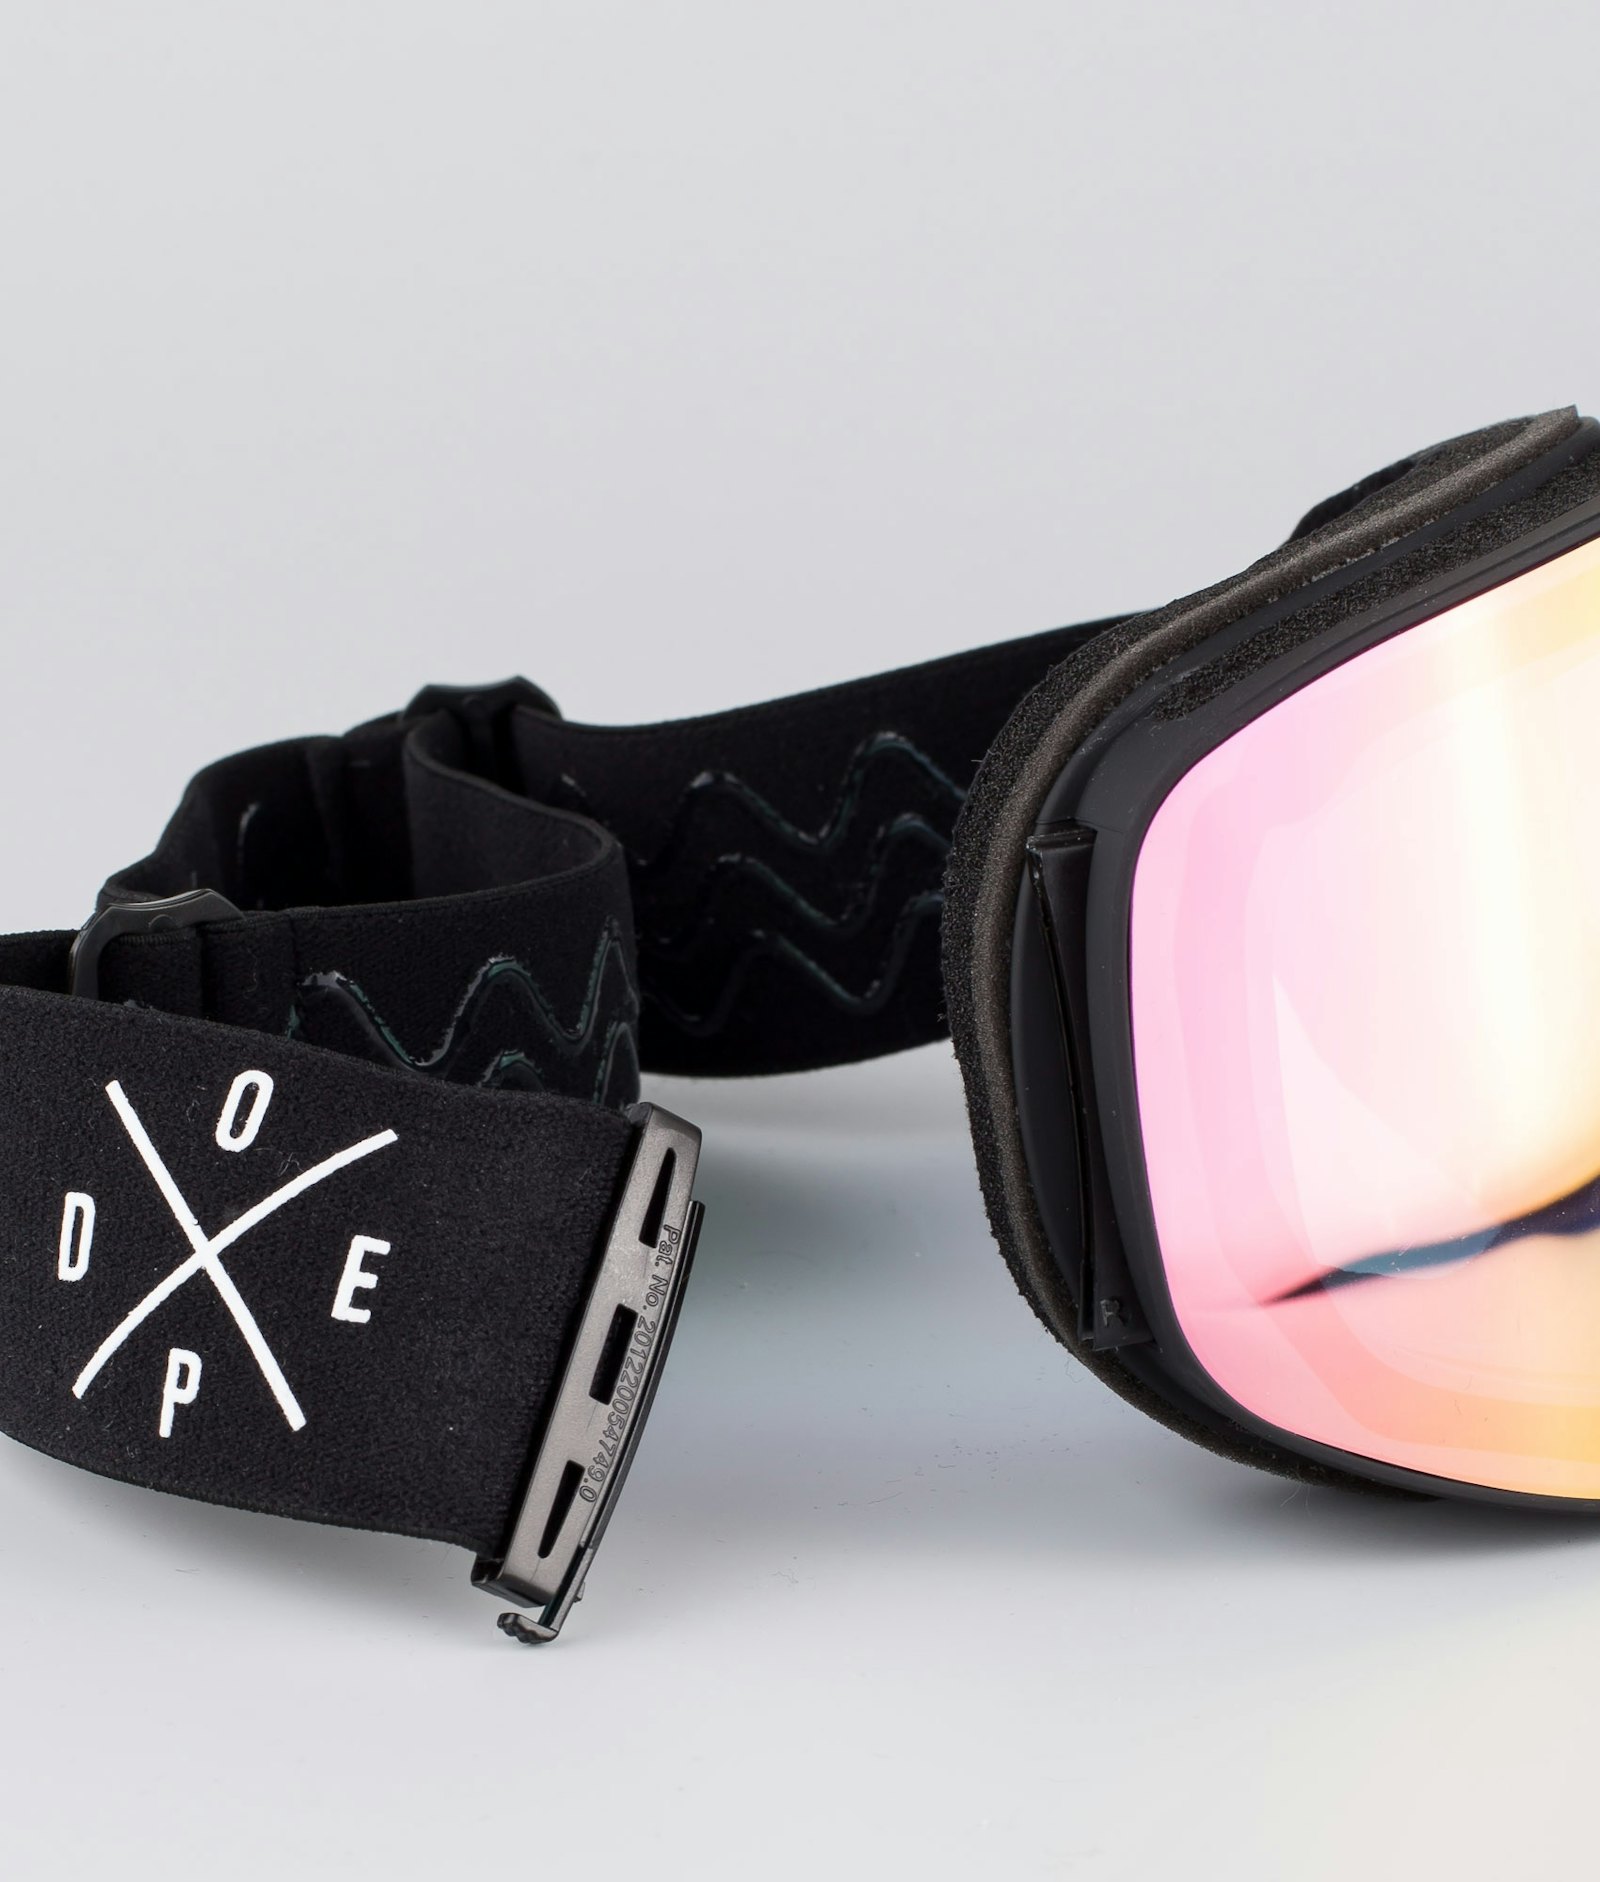 Dope Flush 2X-UP Ski Goggles Black W/Black Pink Mirror